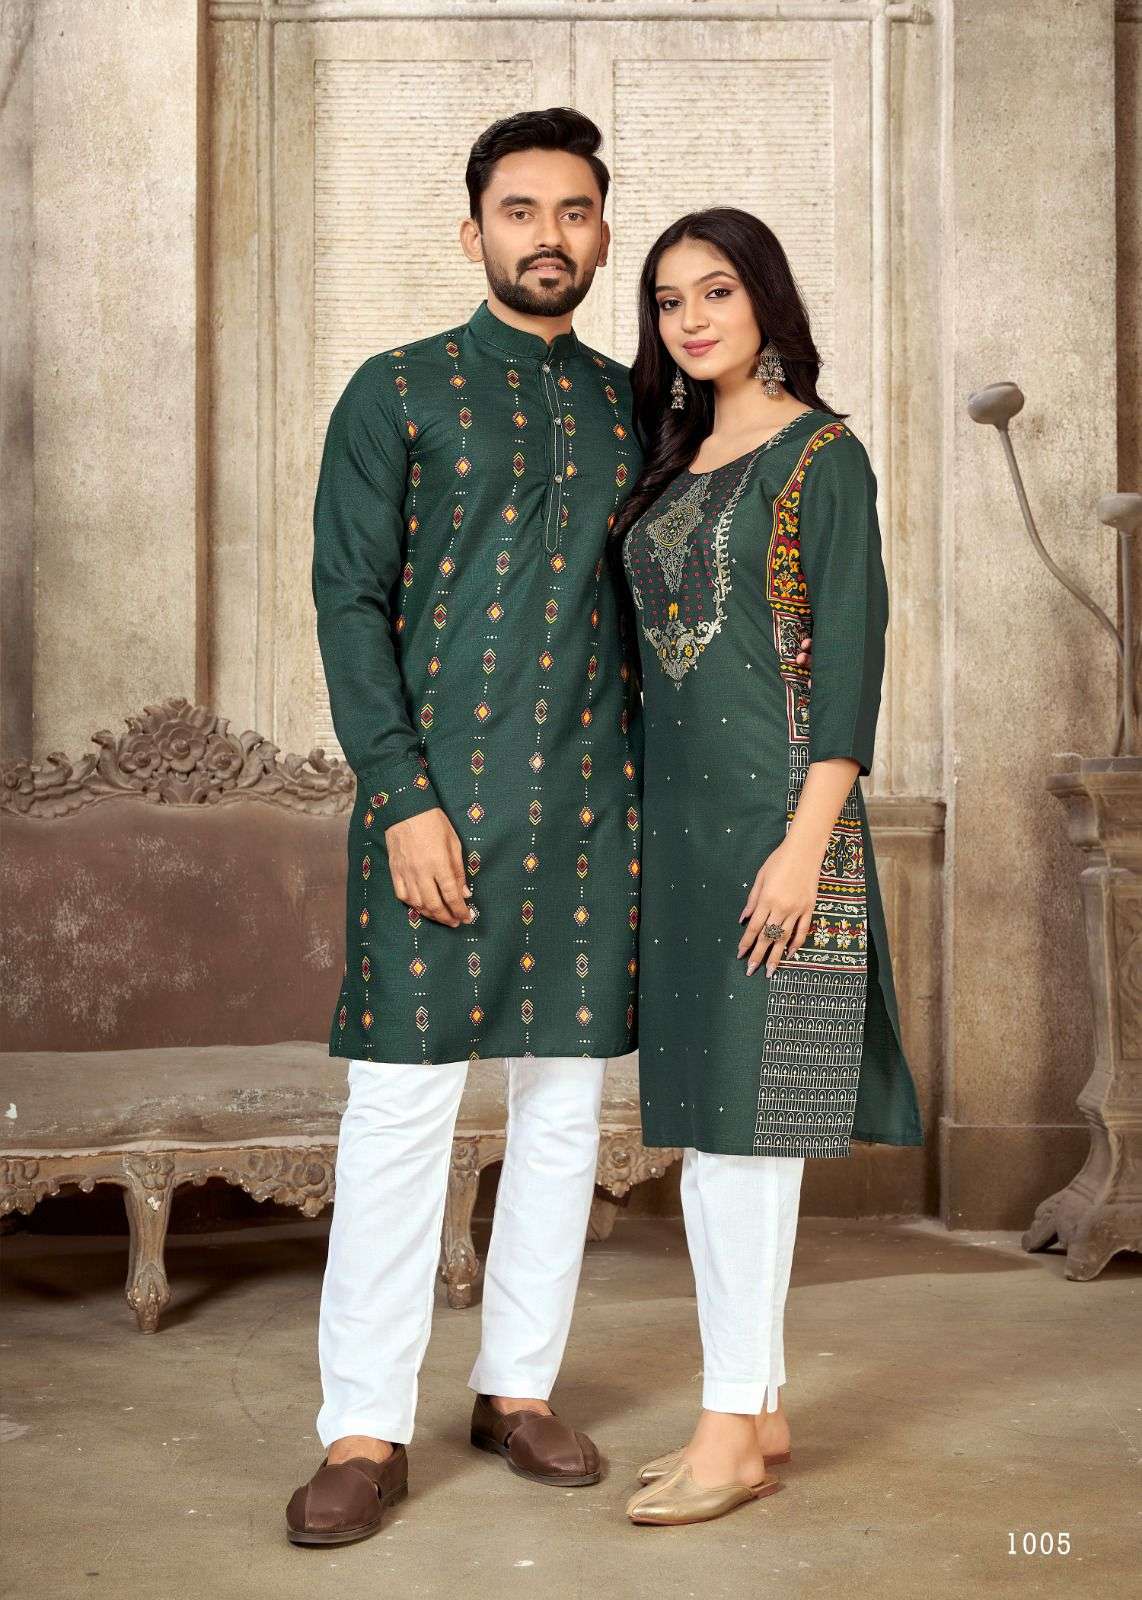 couple goals nx couple same traditional wear kurtie for women and kurta for men same twinning couples kurtie and kurta combo couple wearing same 